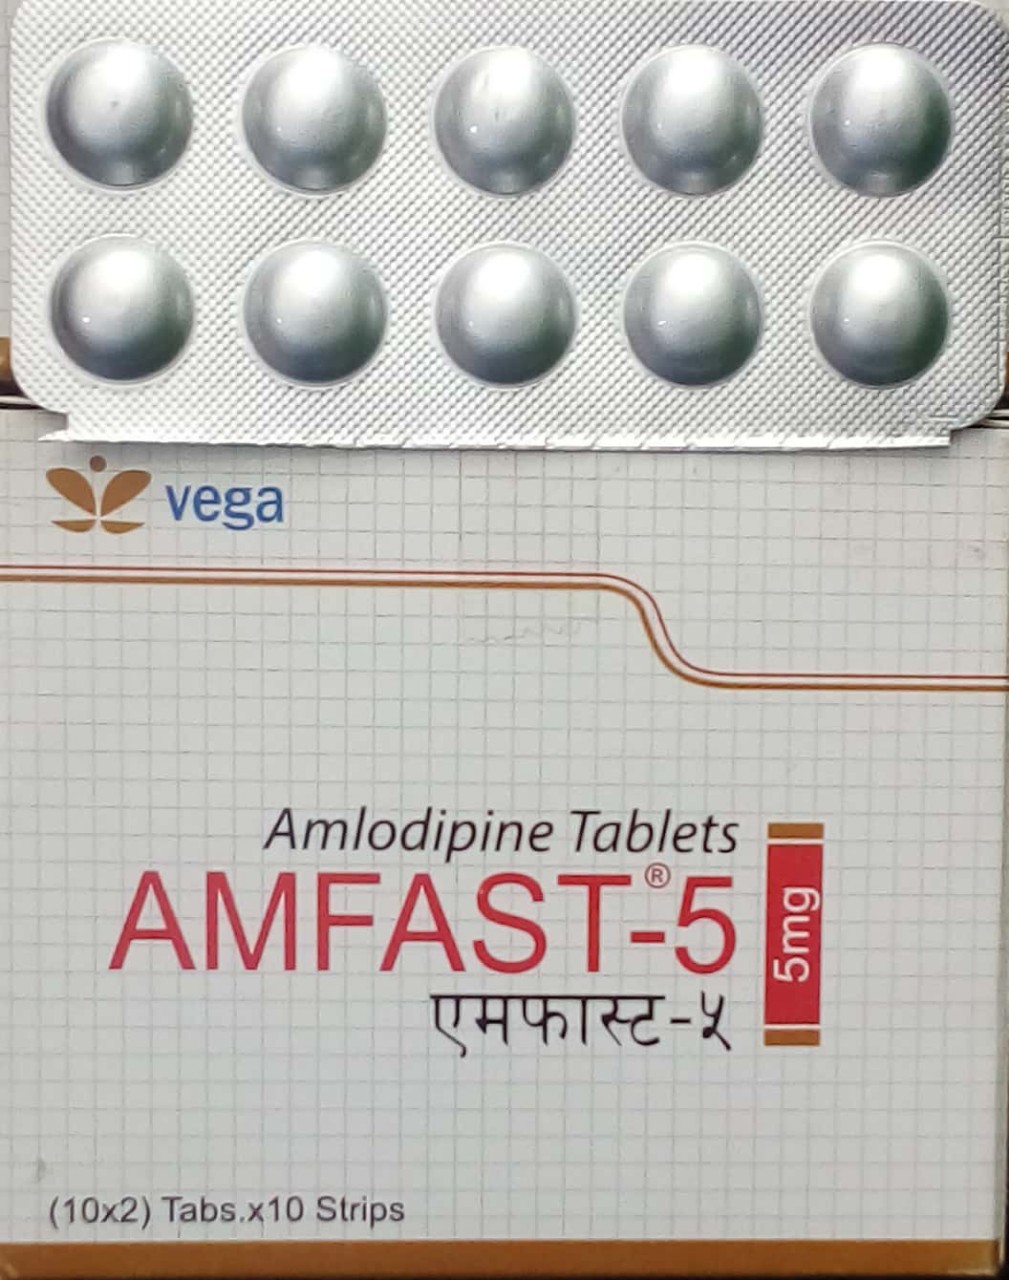 Amfast-5mg